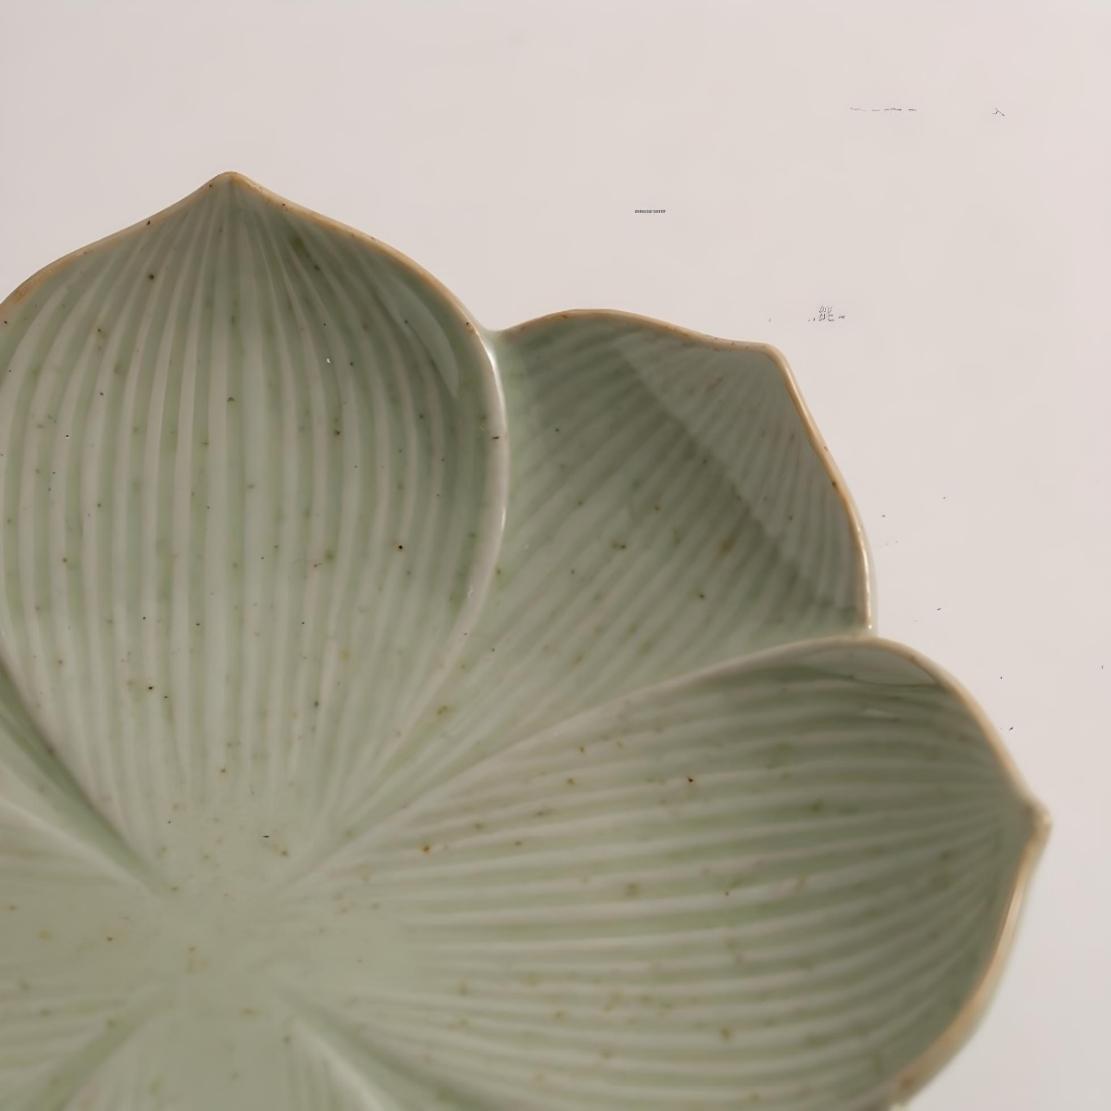 Green, ceramic lotus flower ceramic plate